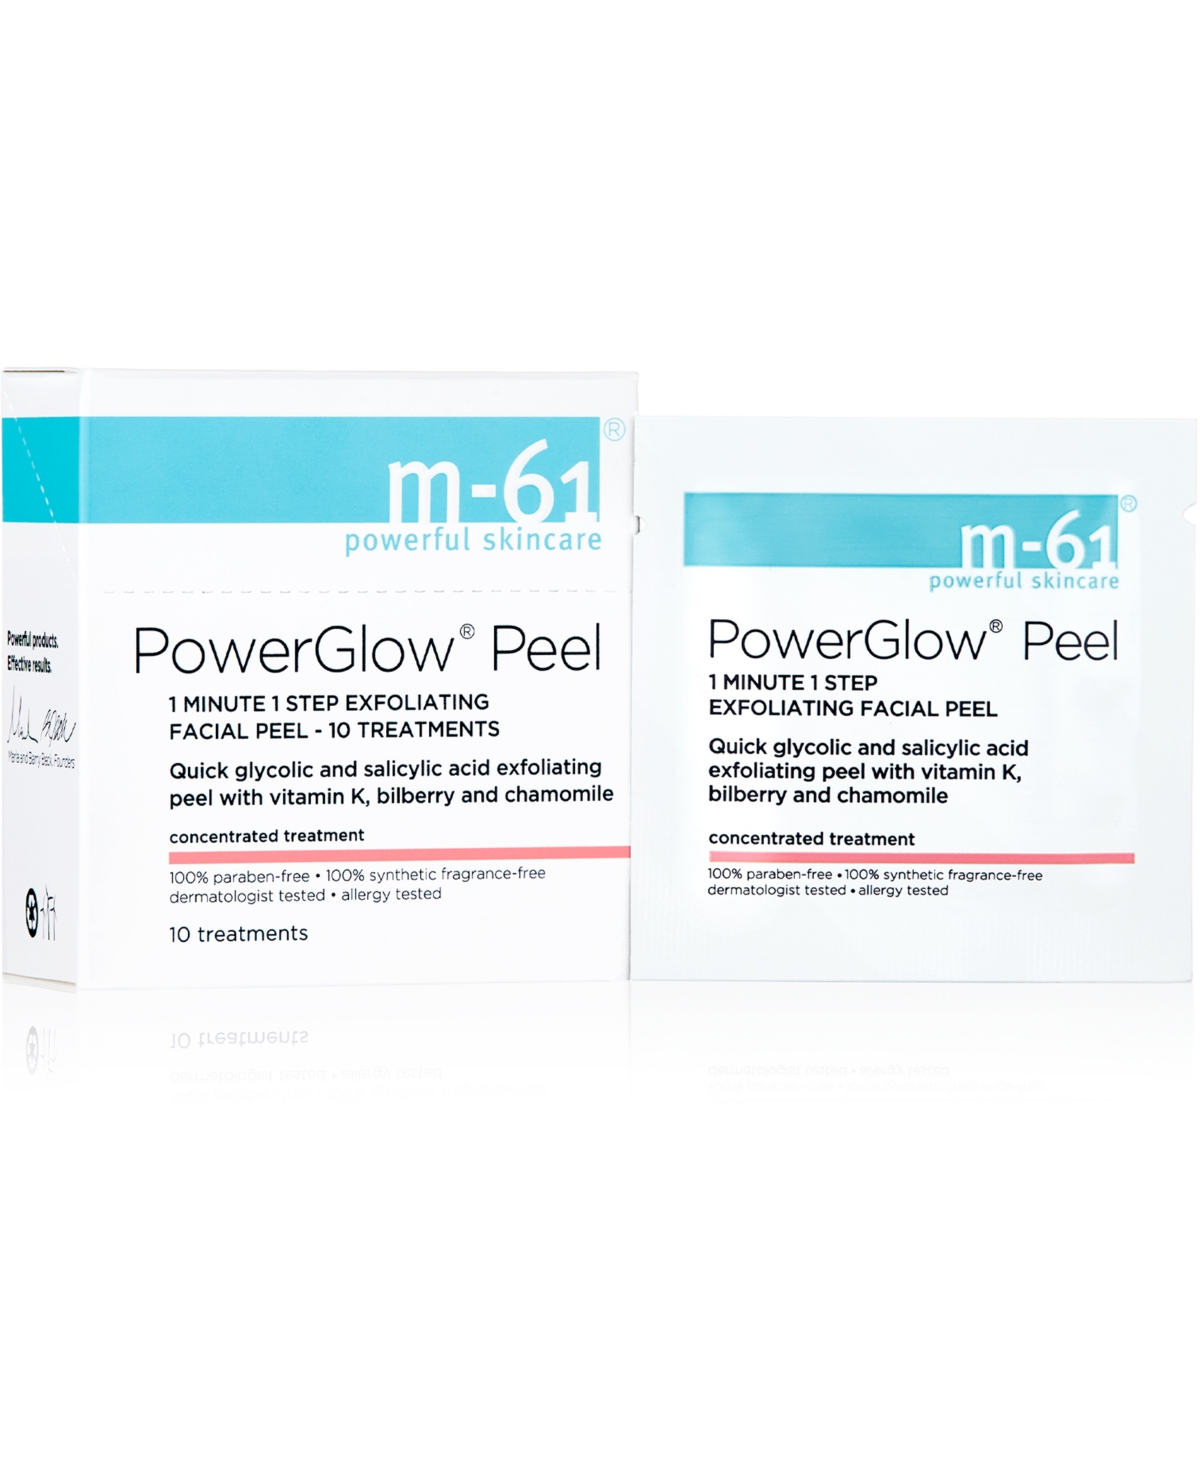 m-61 by Bluemercury PowerGlow Peel 1 Minute 1-Step Exfoliating Facial Peel - 10 Treatments